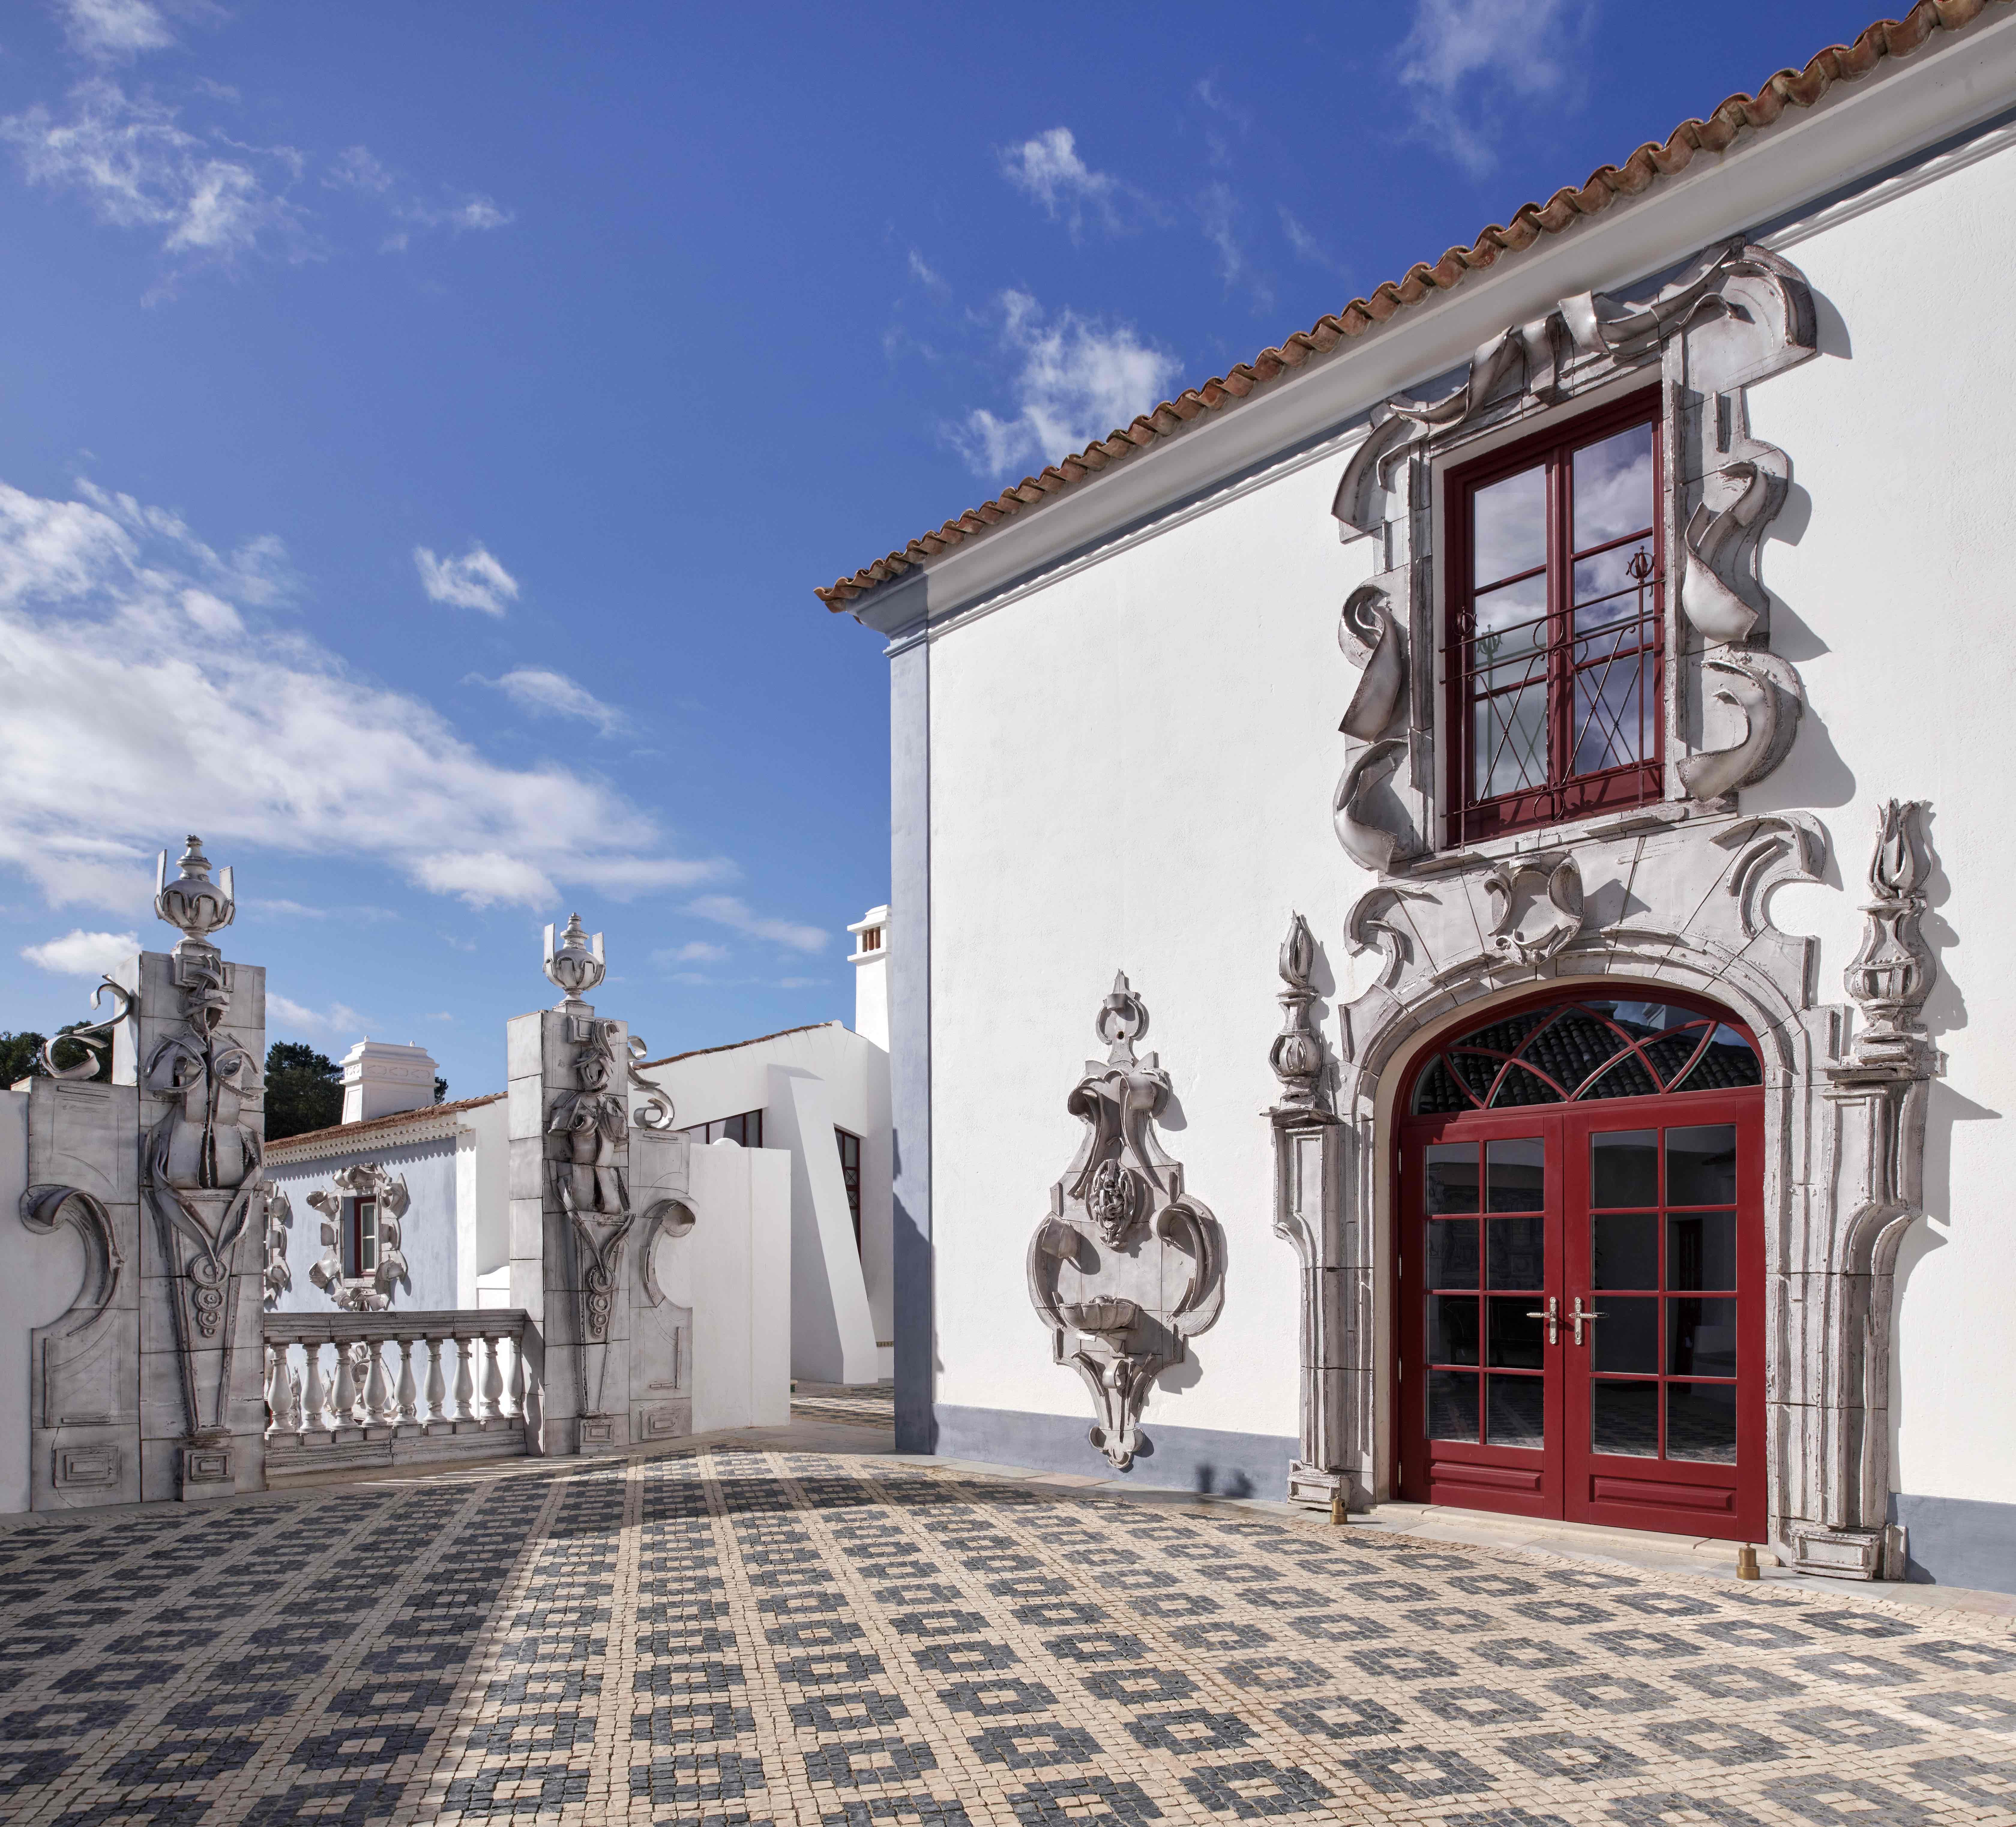 Stivali - Designer Shopping - Portugal Confidential